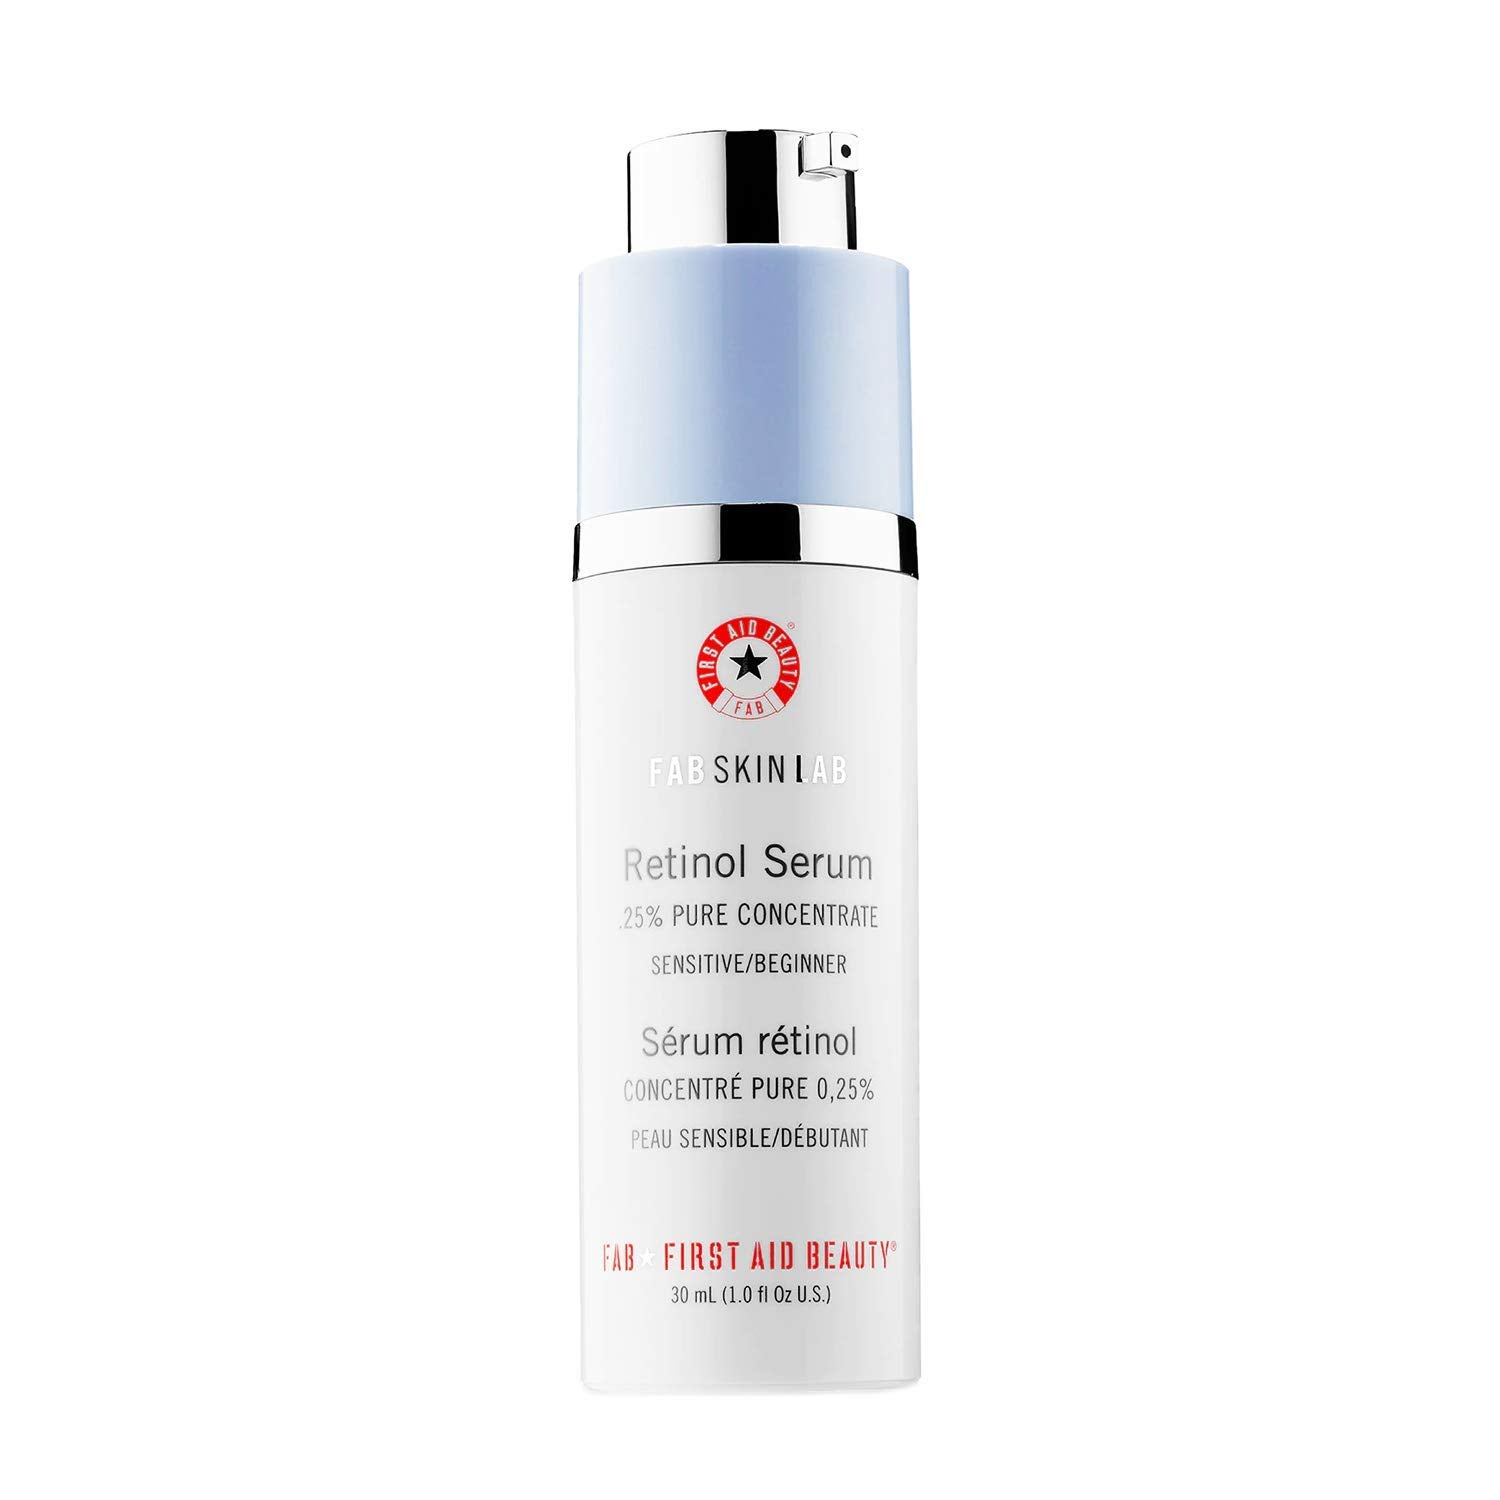 First Aid Beauty FAB Skin Lab Retinol Serum .25% Pure Concentrate, Anti-Aging Serum for Sensitive Skin – 1.0 Oz.